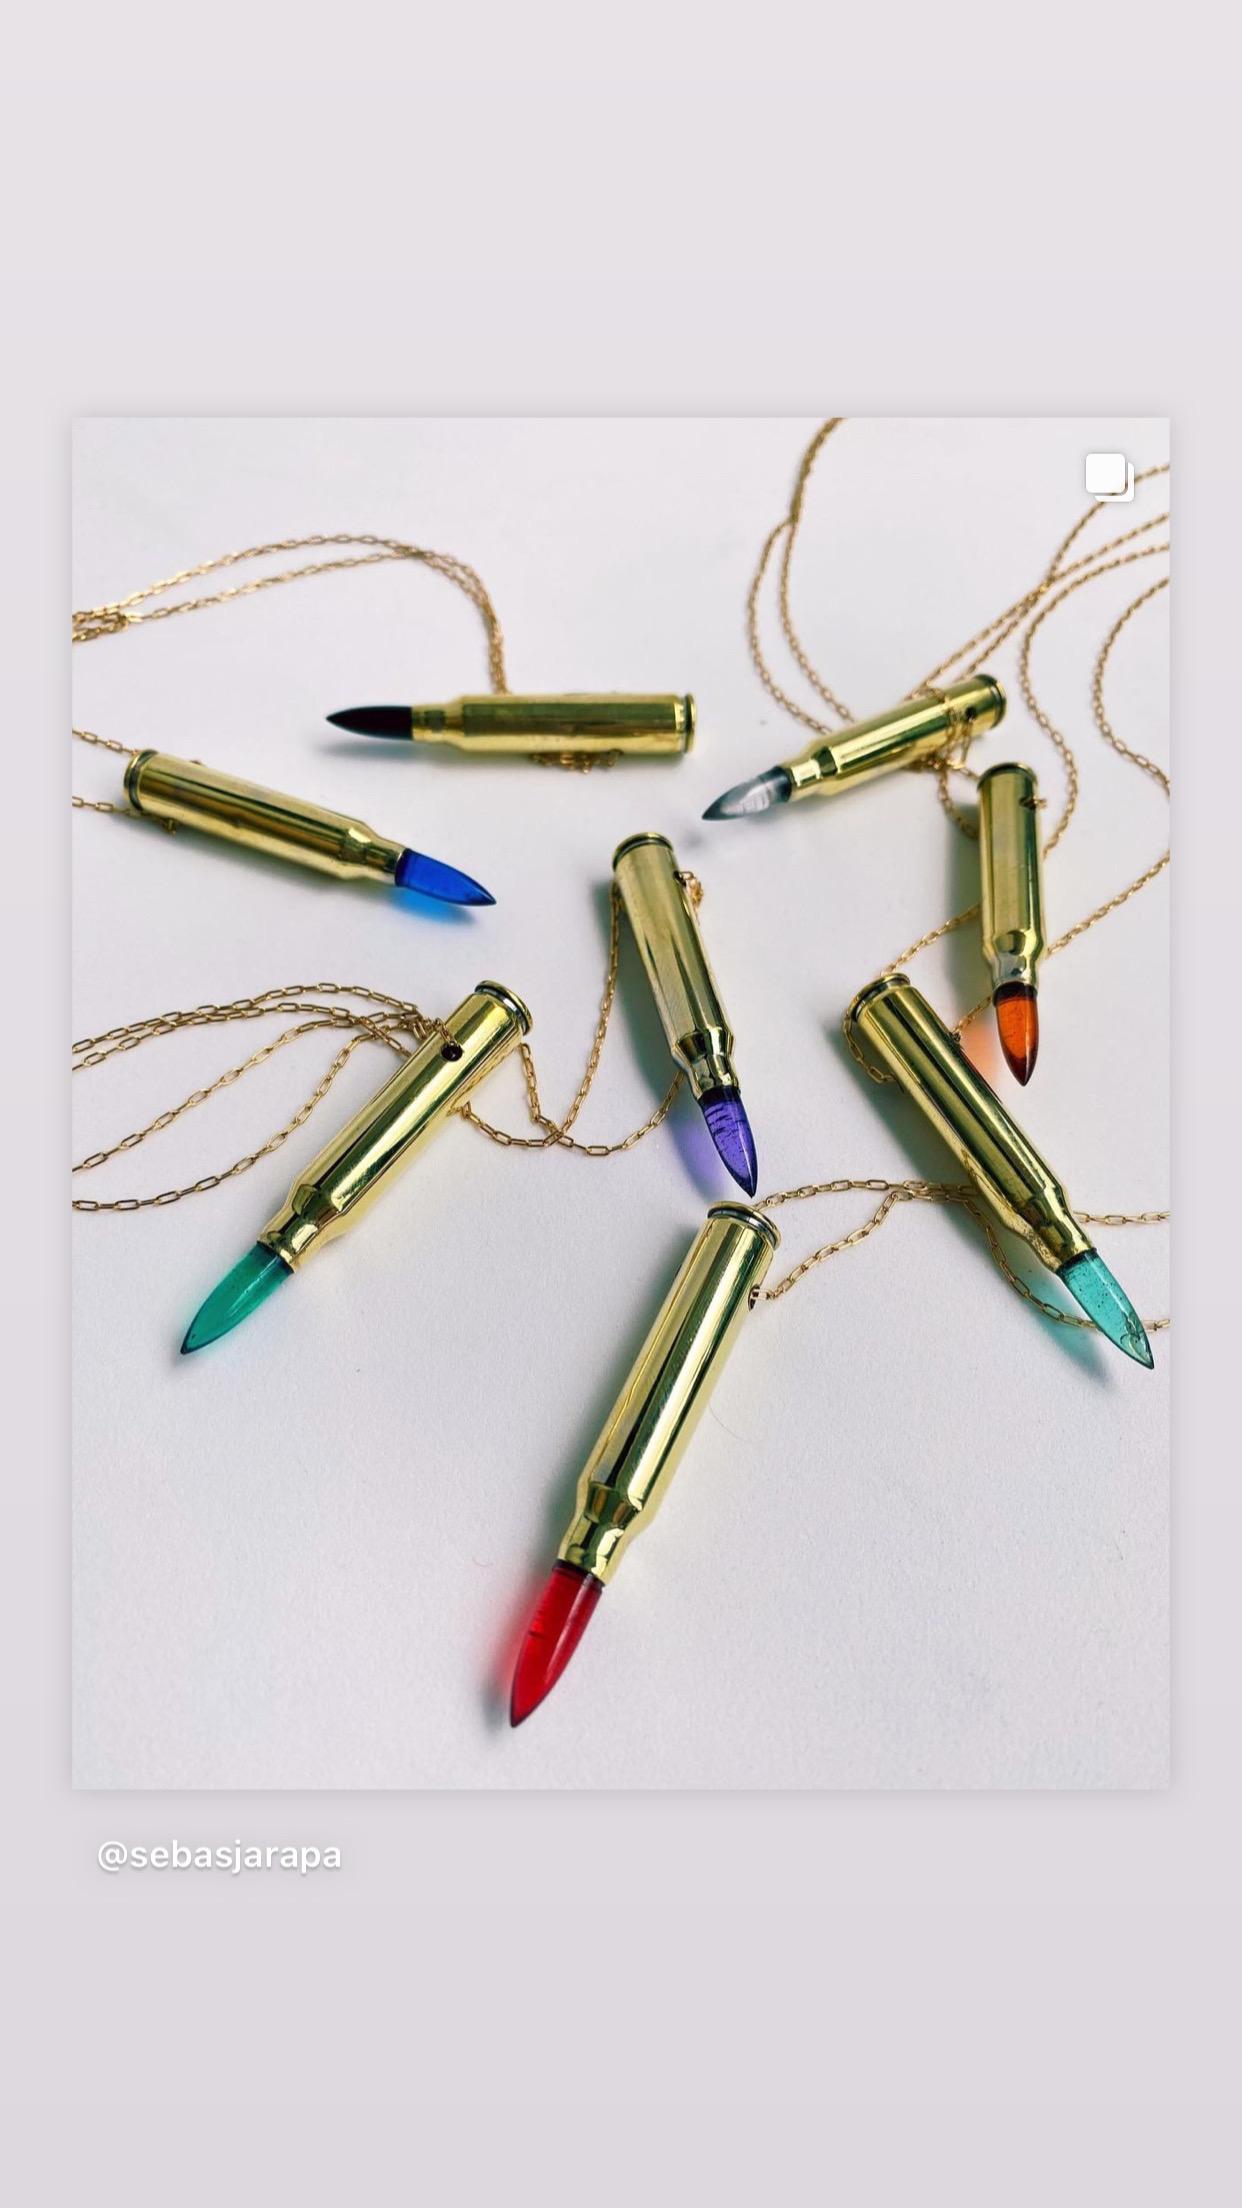 Artist Gold filled bullet casket with colored resin tip For Sale